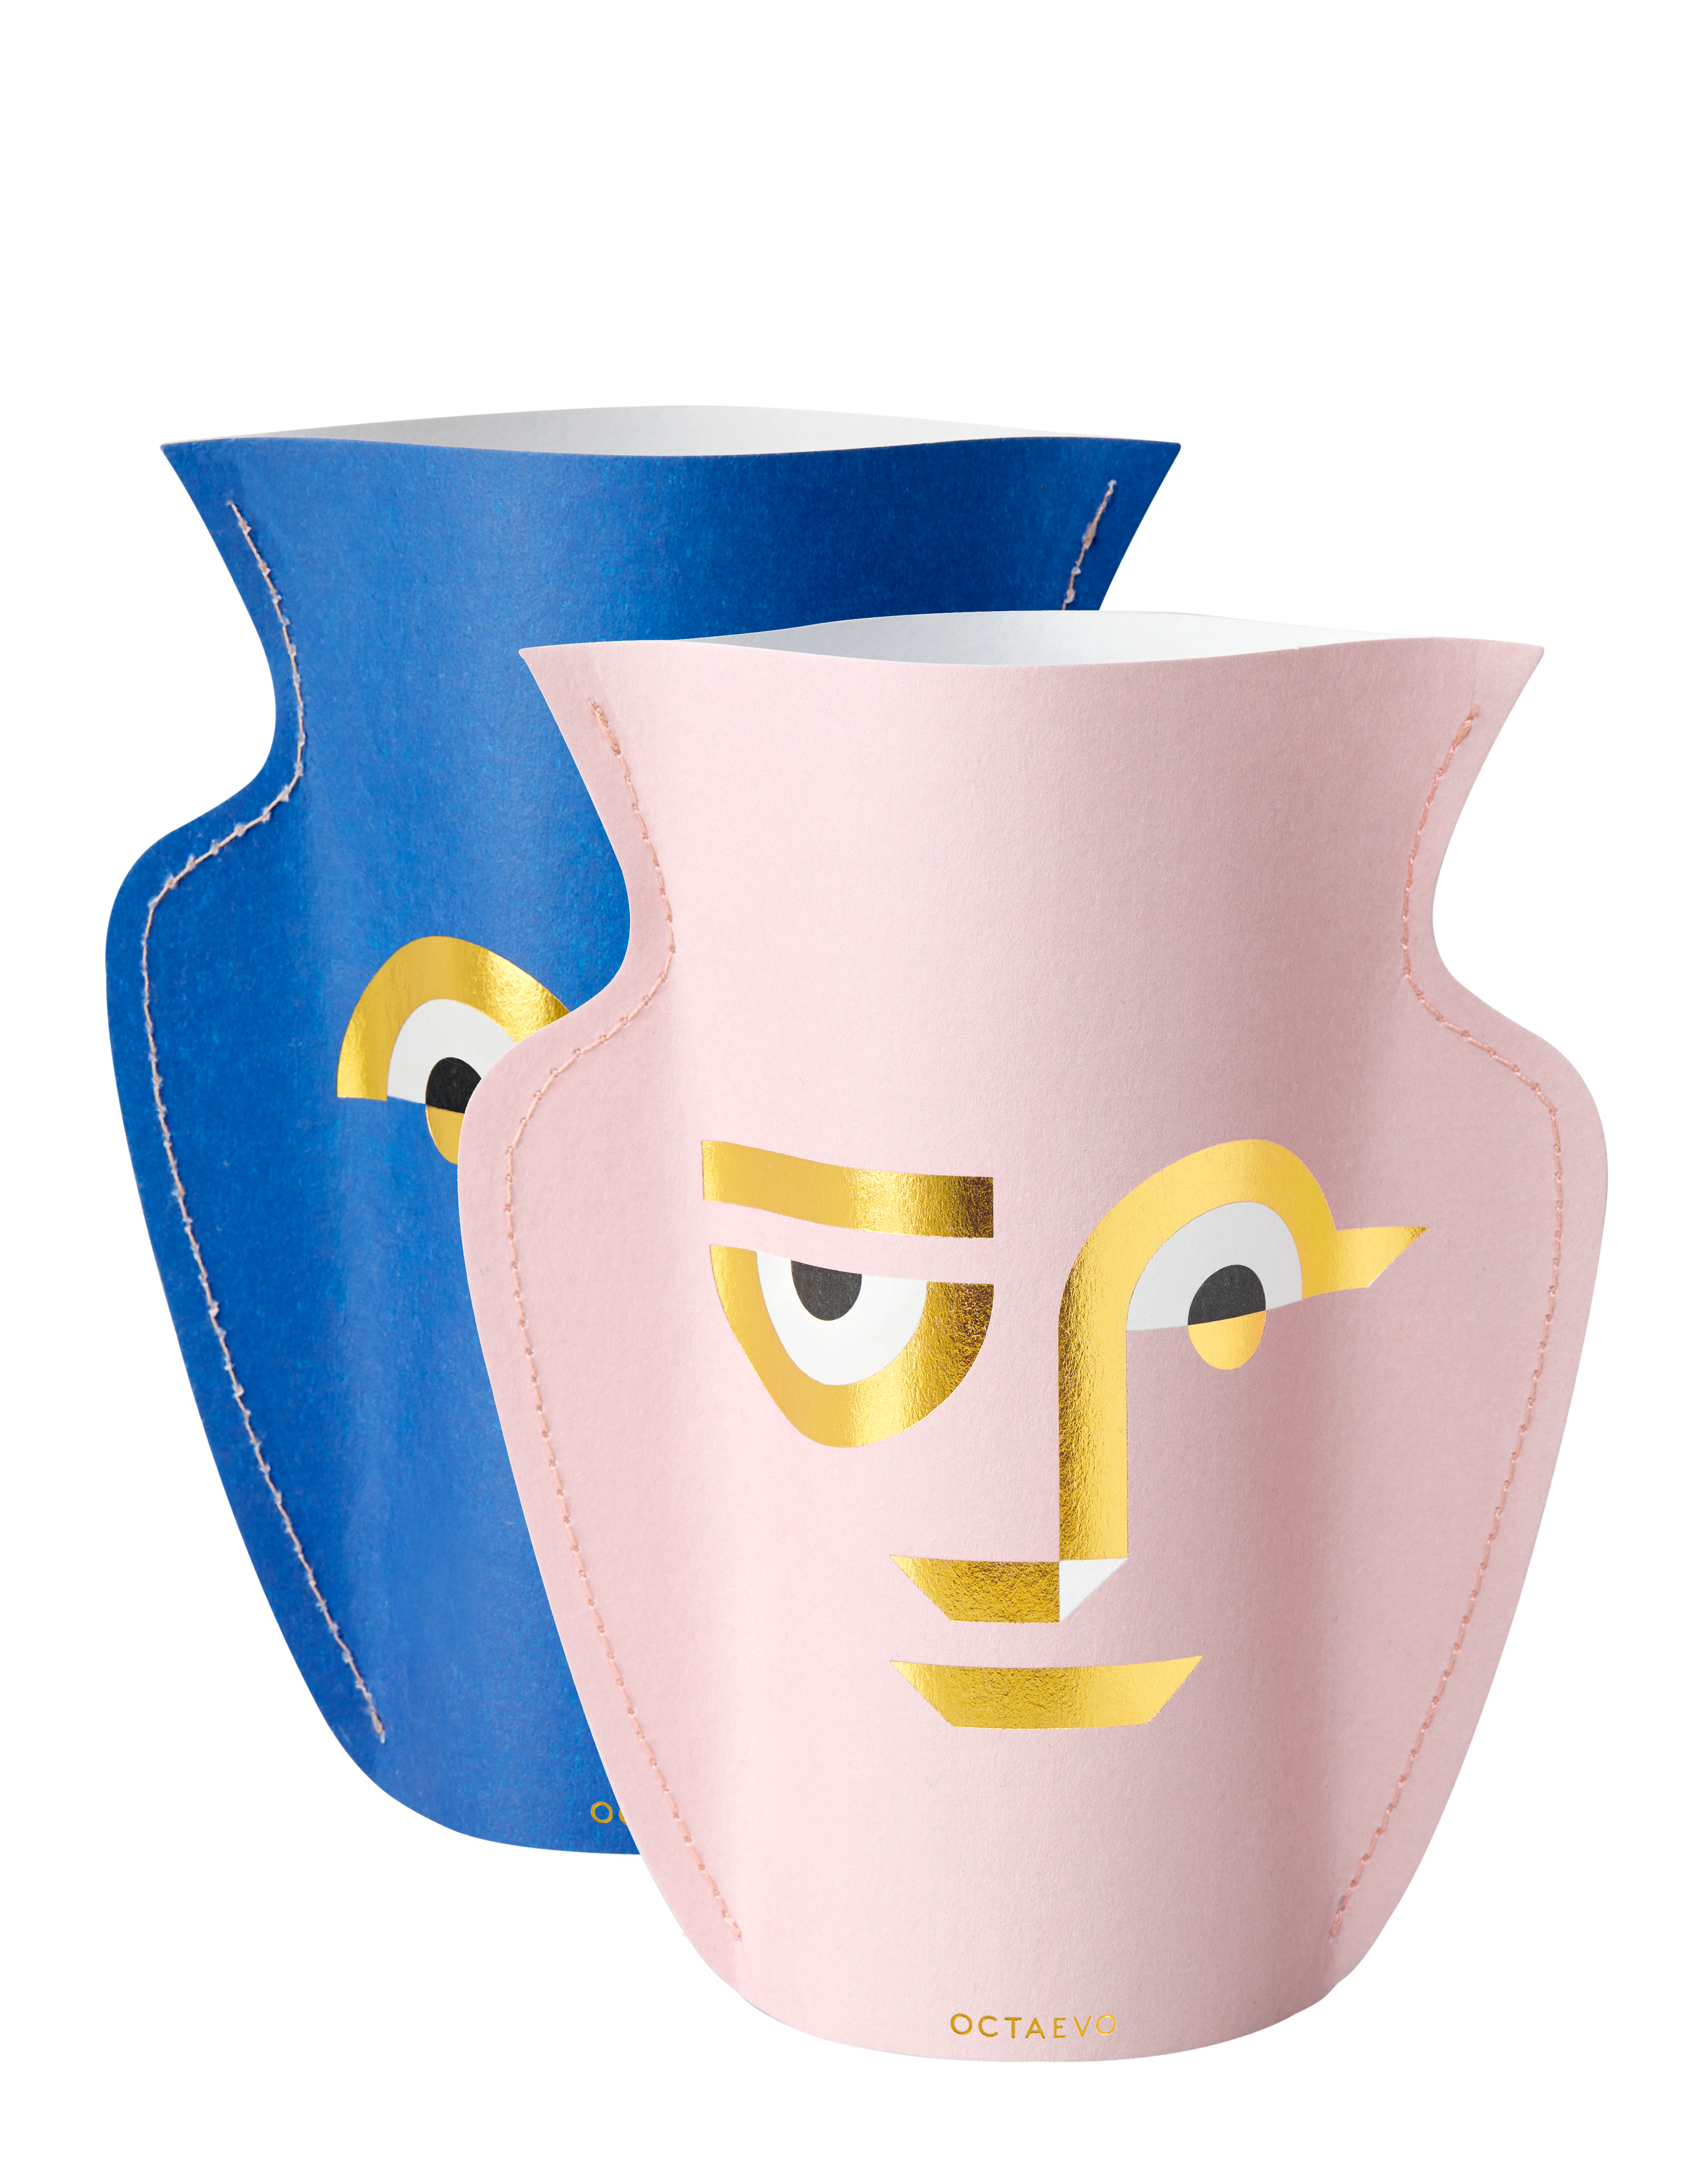 – Paper Vases Octaevo